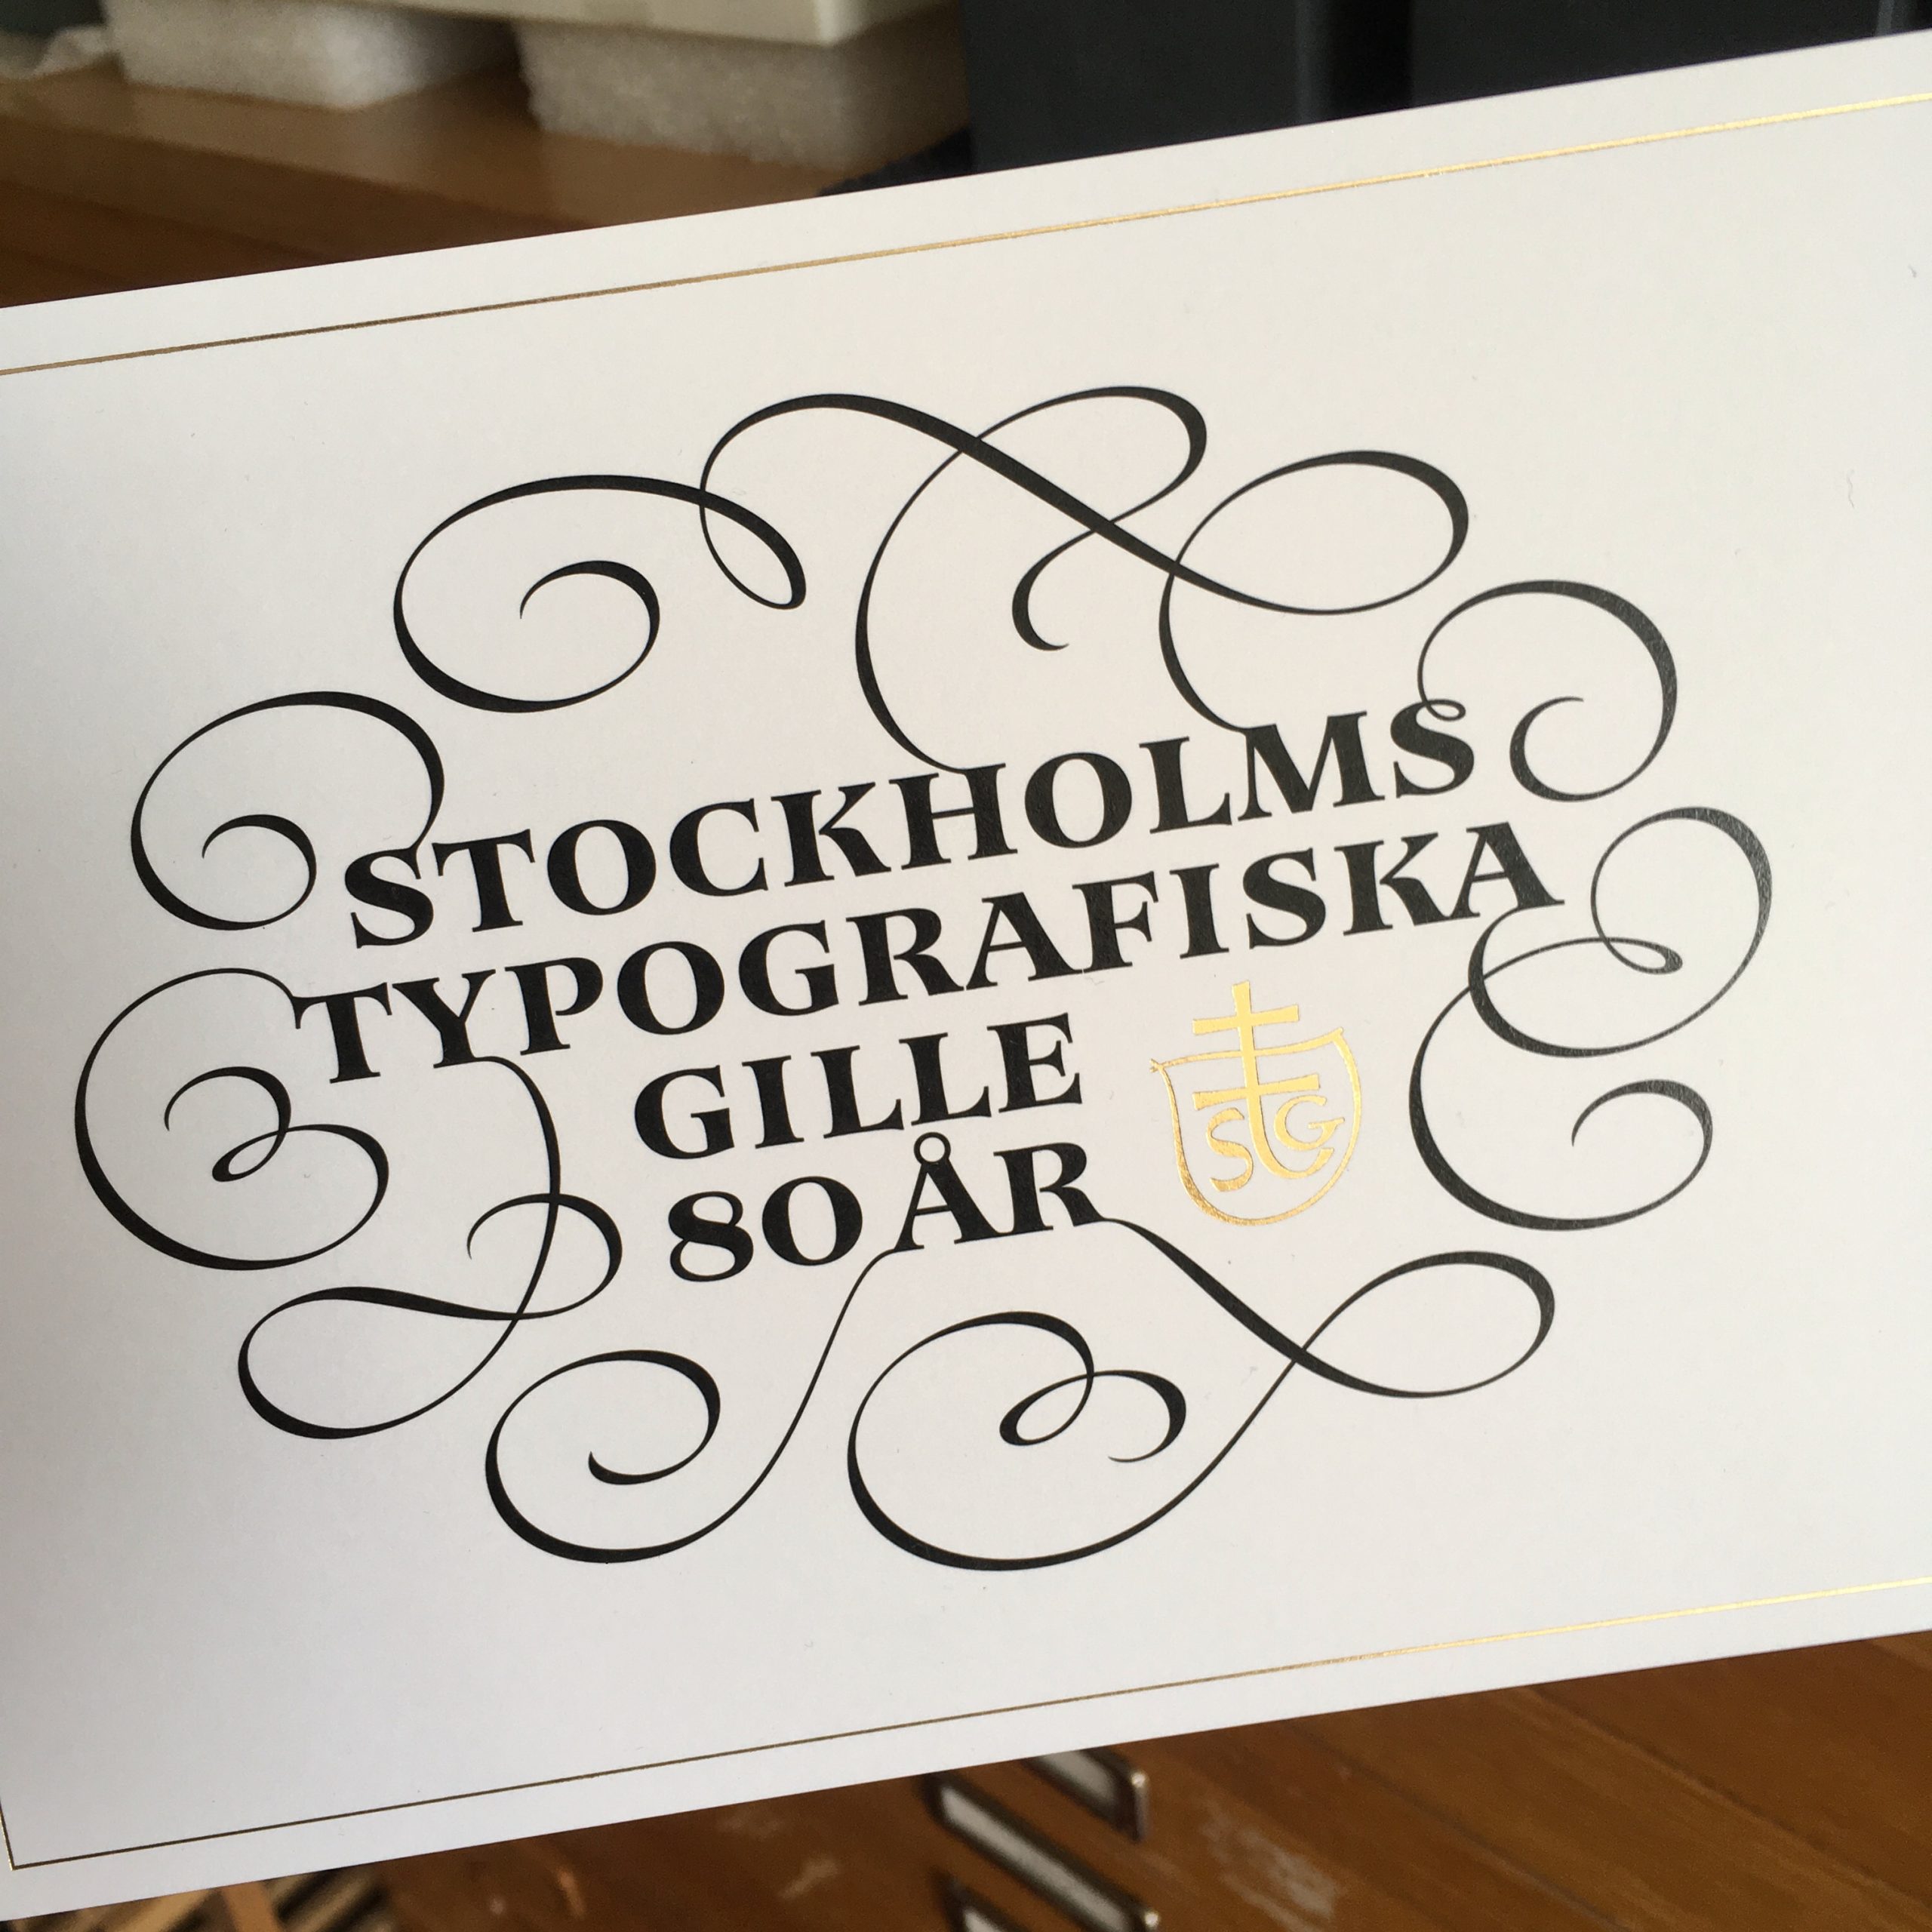 Stockholms typografiska gille 80 år!